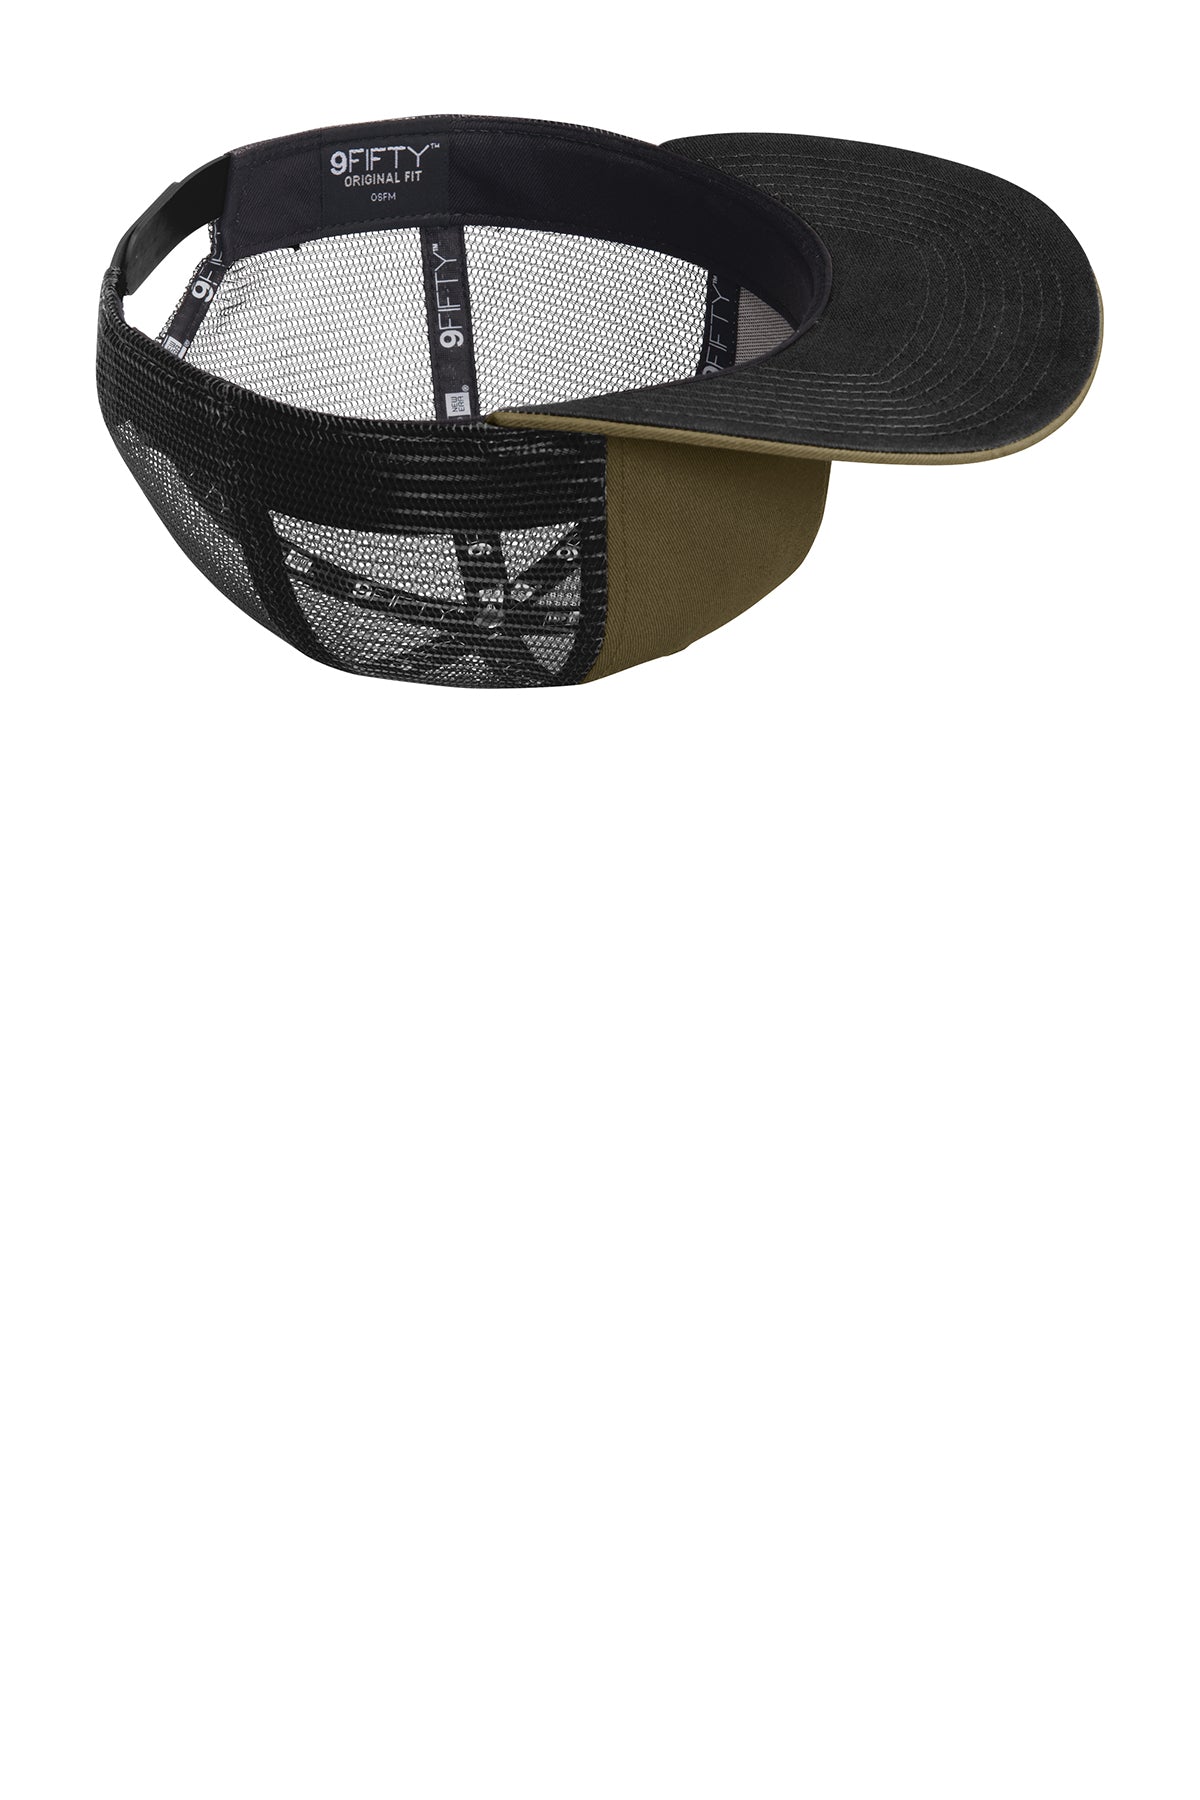 New Era Original Fit Snapback Trucker Customized Caps, Olive/ Black